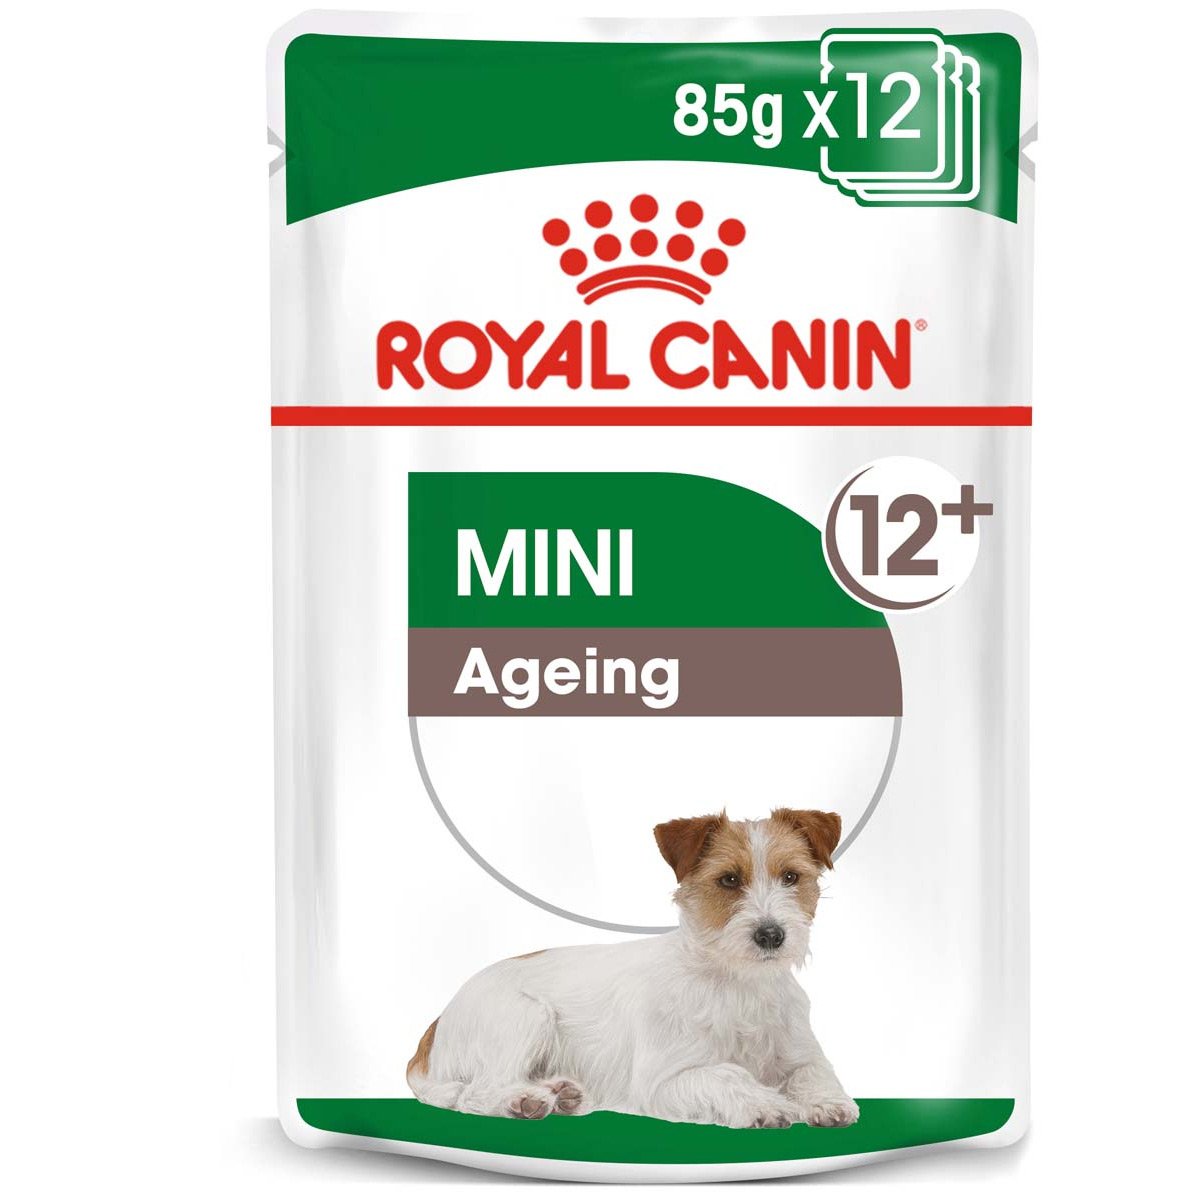 ROYAL CANIN MINI AGEING 12+ Nassfutter für ältere kleine Hunde 24x85g von Royal Canin